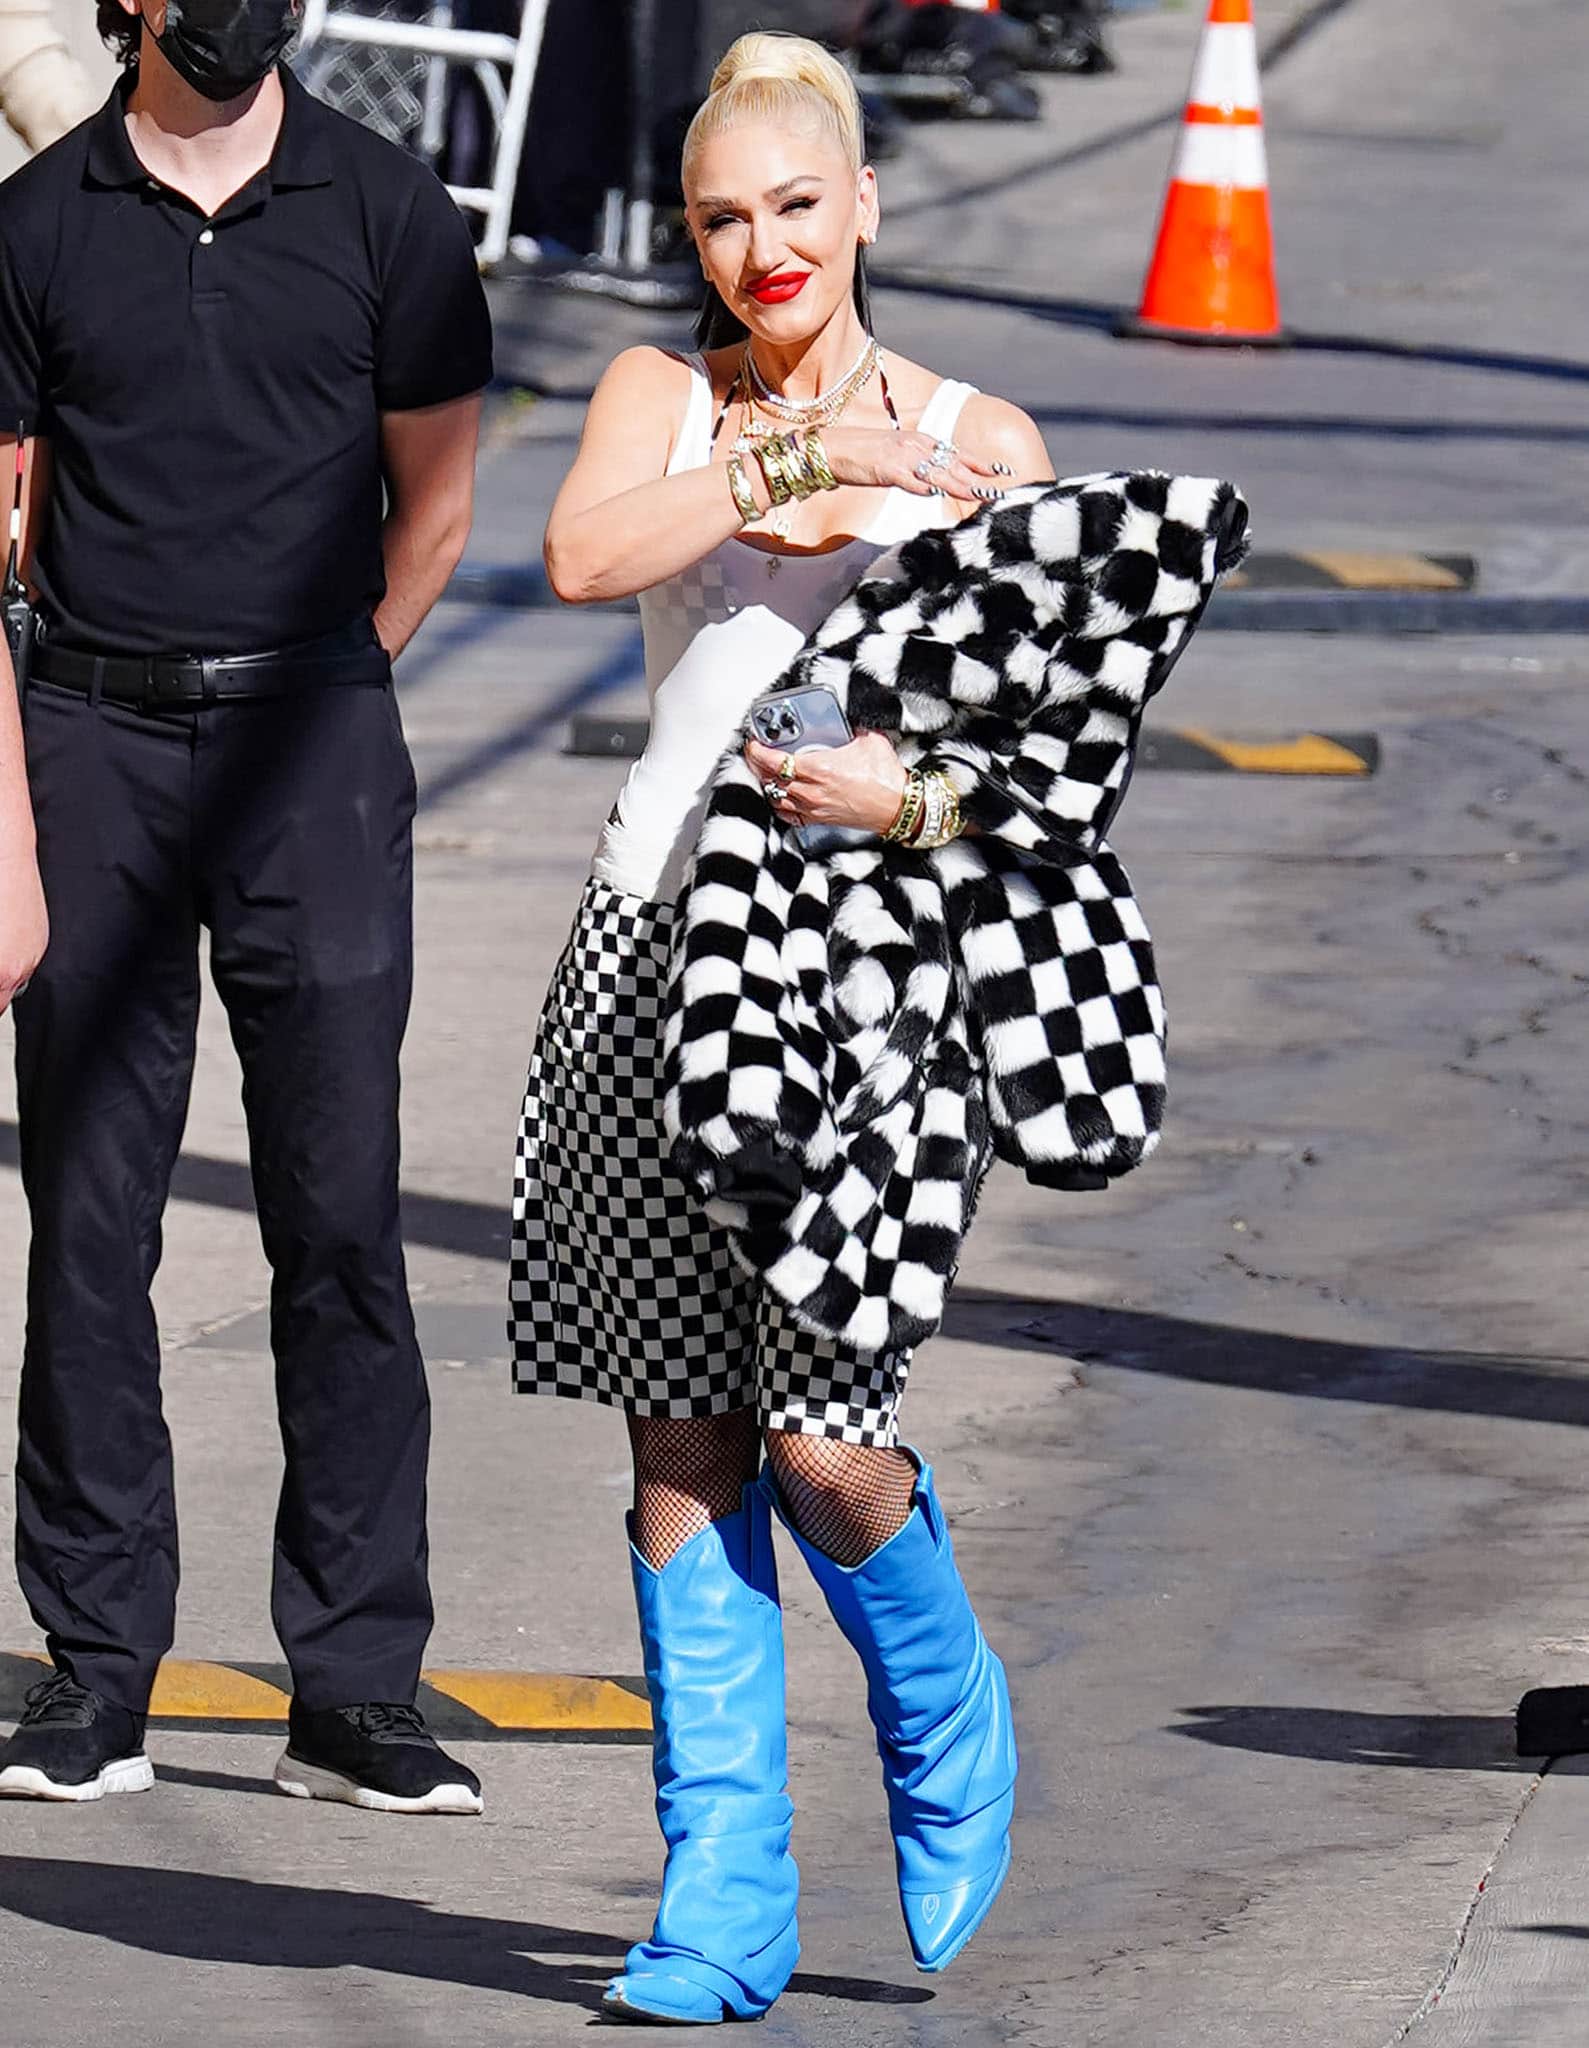 Gwen Stefani arriving at Jimmy Kimmel Live! studios to promote her new makeup line GXVE on March 24, 2022